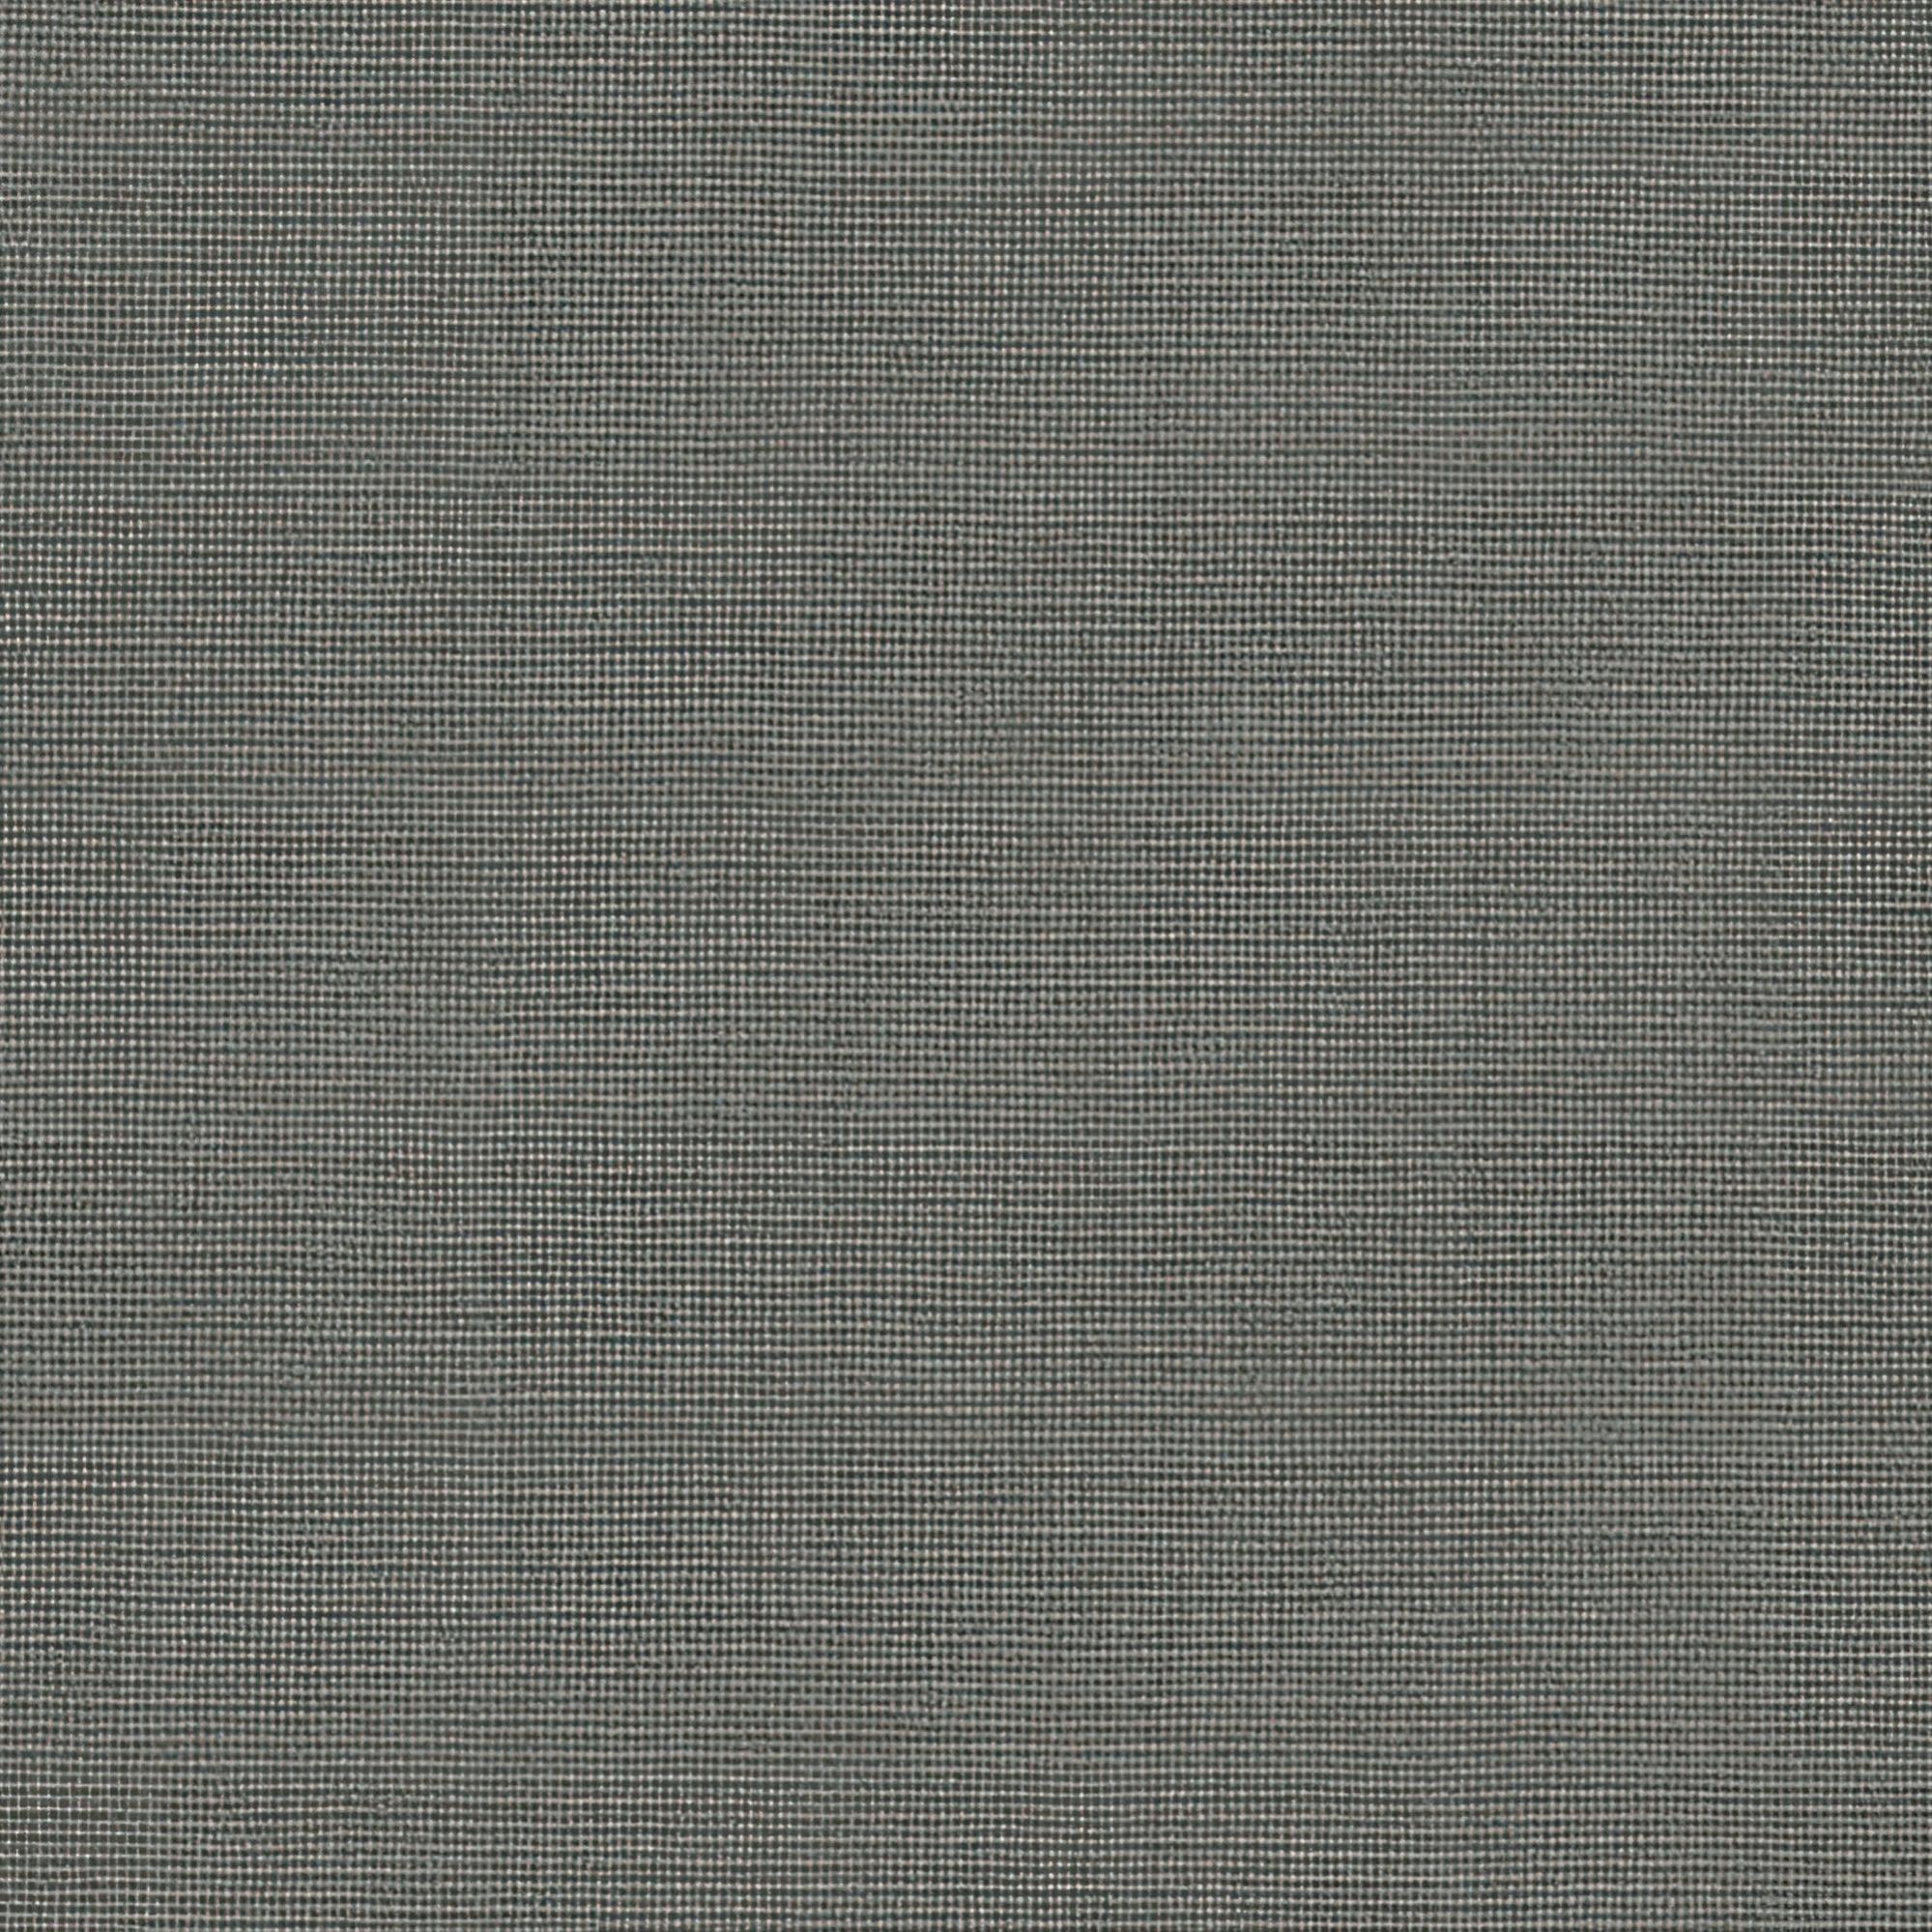 Tela al corte tapicería loneta brest gris ancho 280 cm